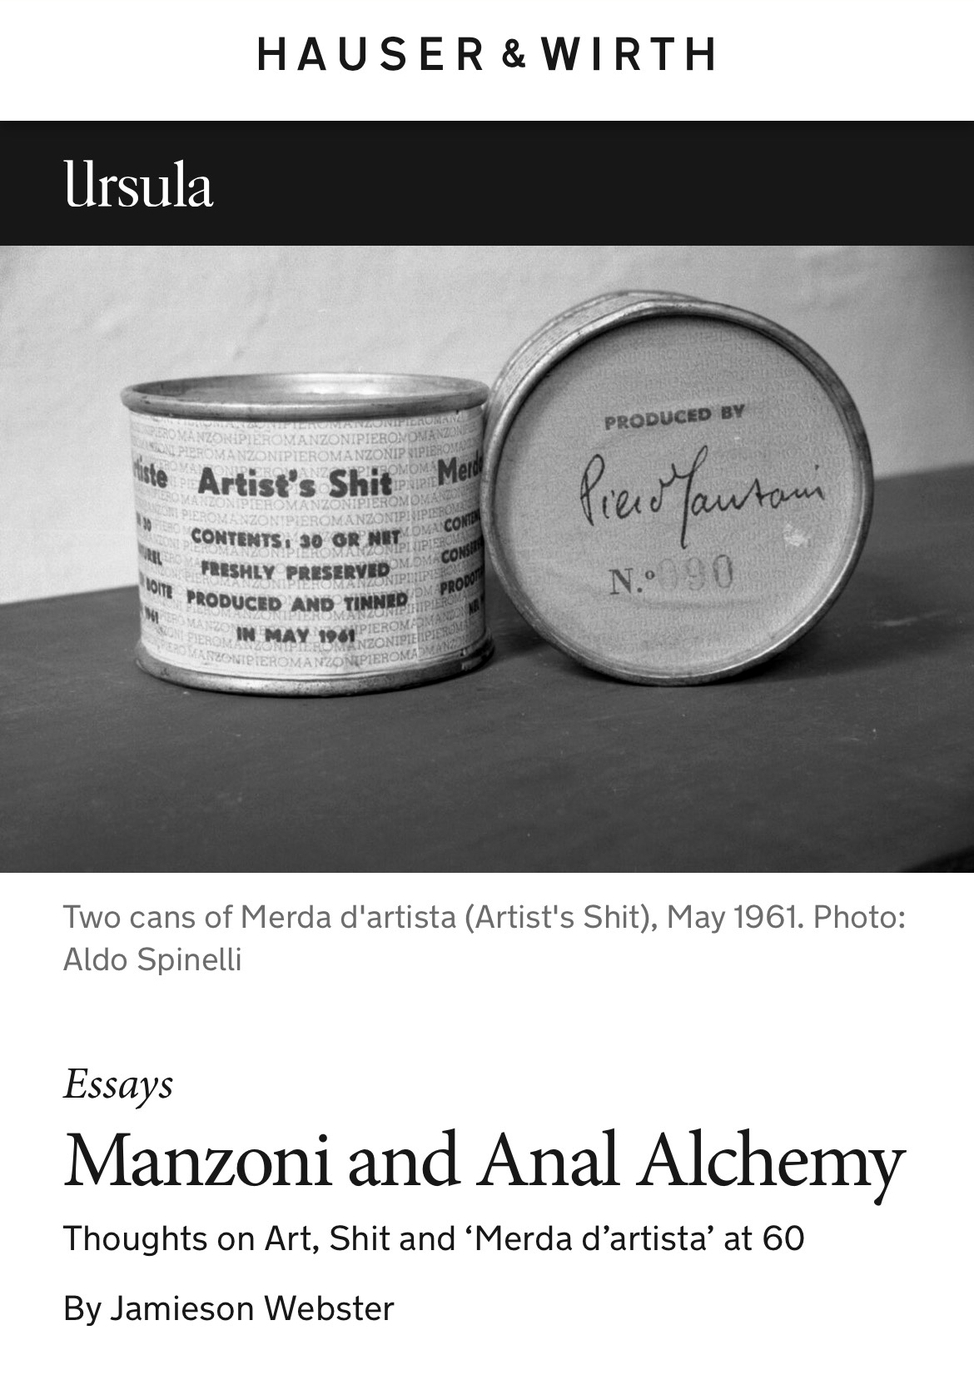 Manzoni and Anal Alchemy